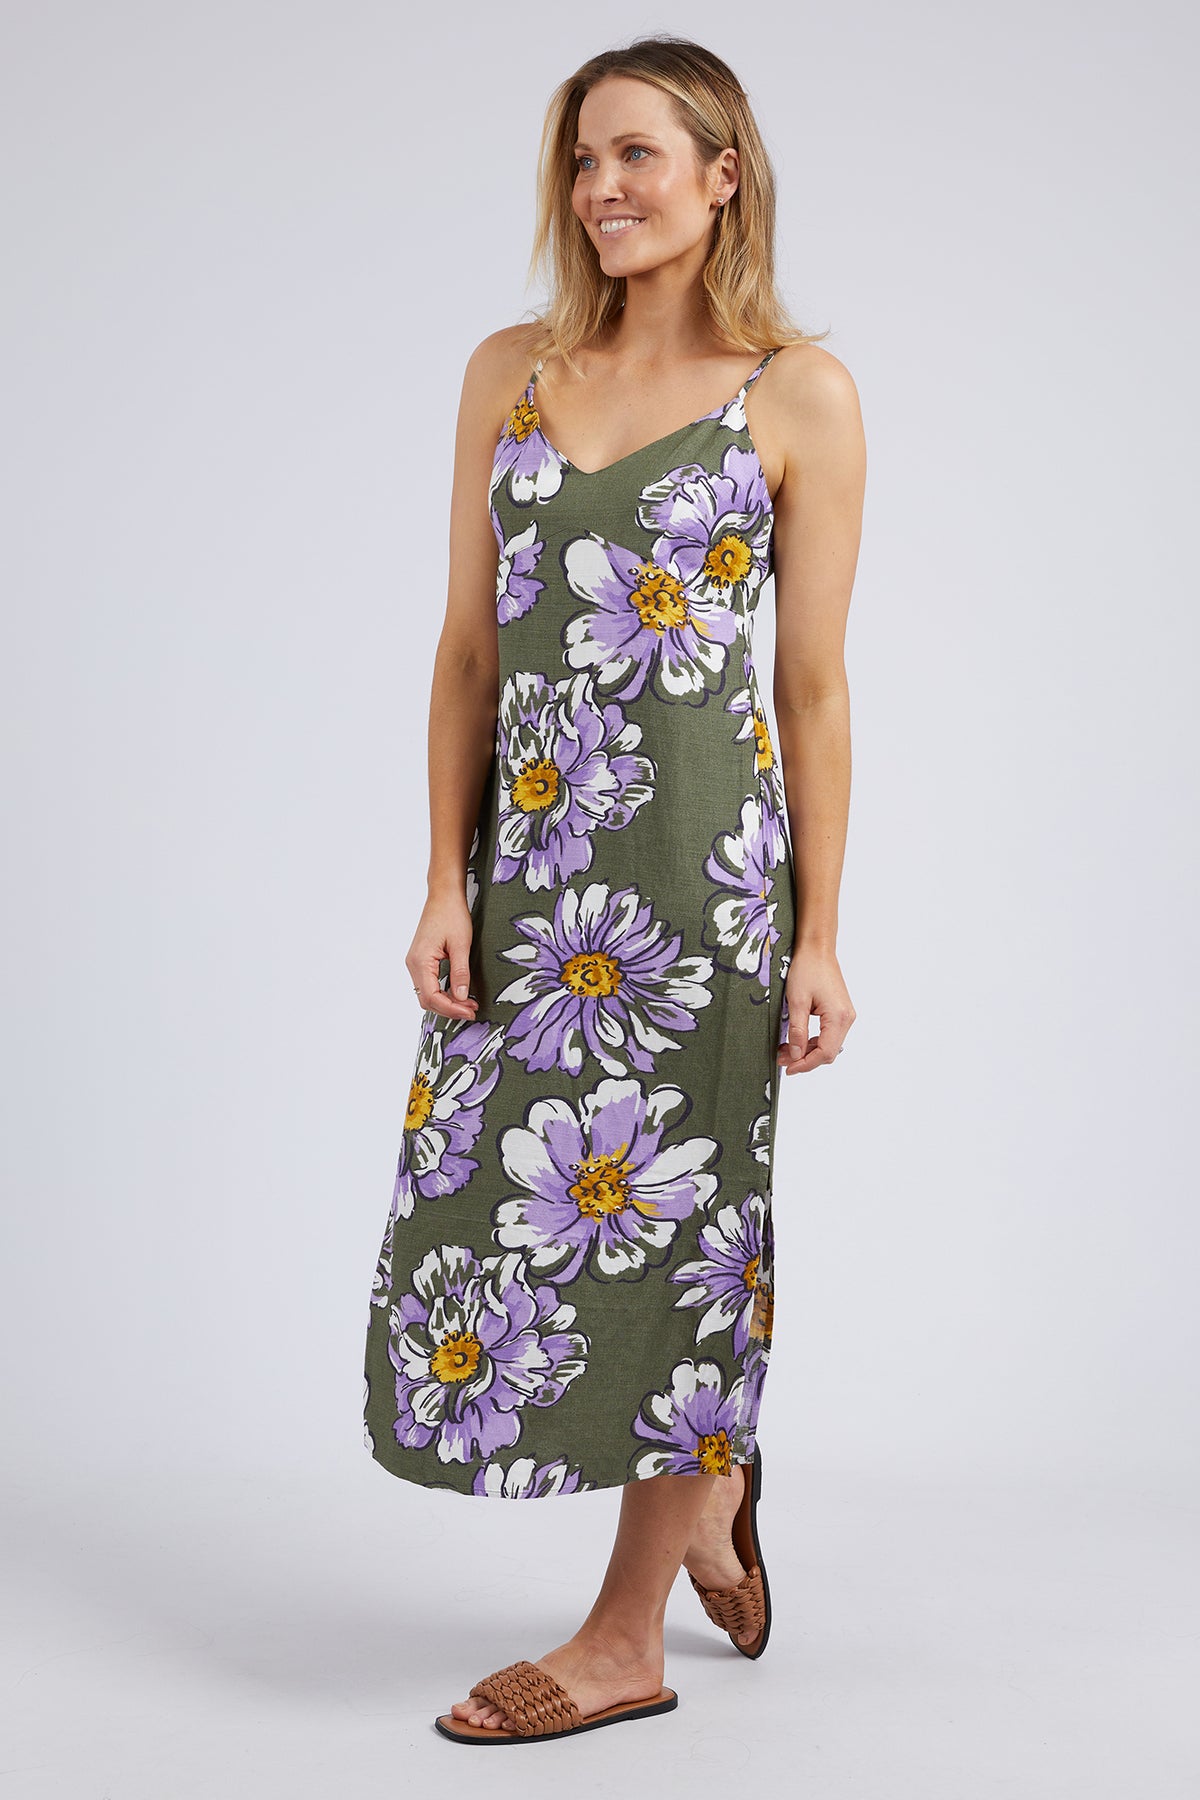 Antheia Floral Slip Dress